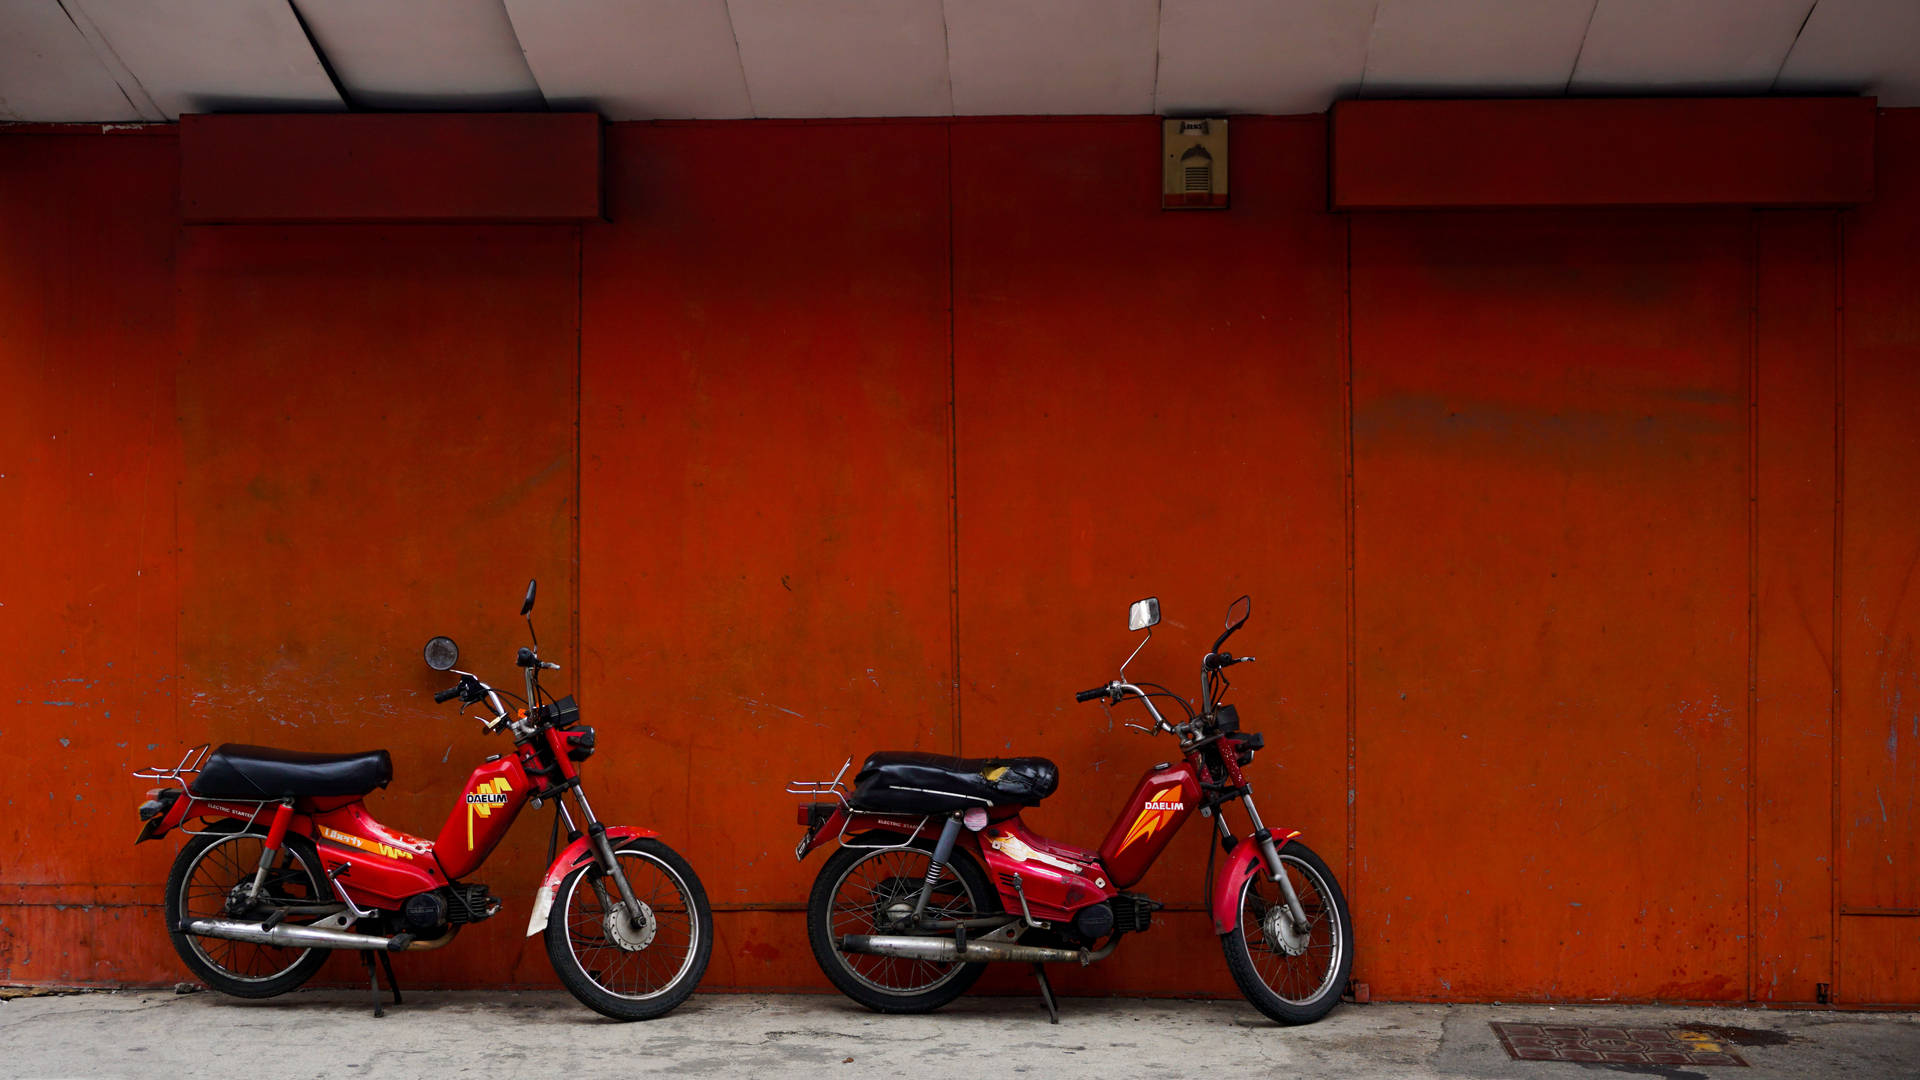 Caption: Sleek Red Bike in an Urban Setting Wallpaper